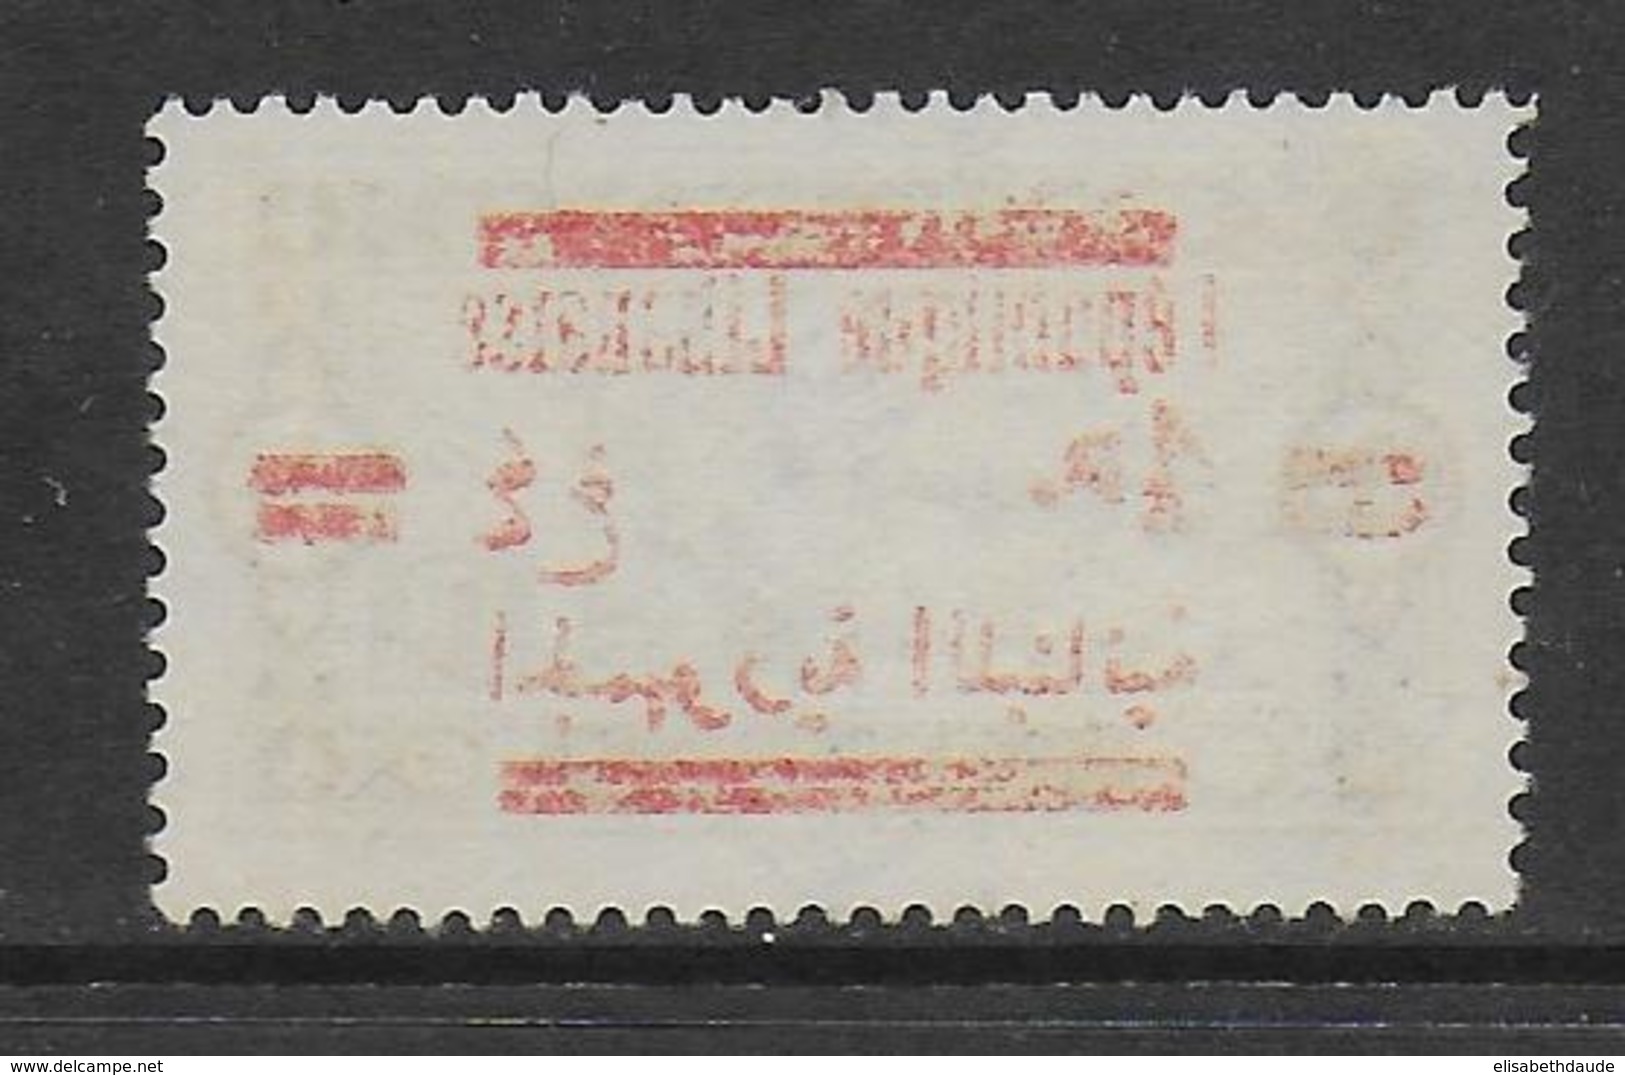 GRAND-LIBAN - 1928 - YVERT N°119 SURCHARGE RECTO-VERSO OBLITERE - COTE = 80 EUR. - Usati